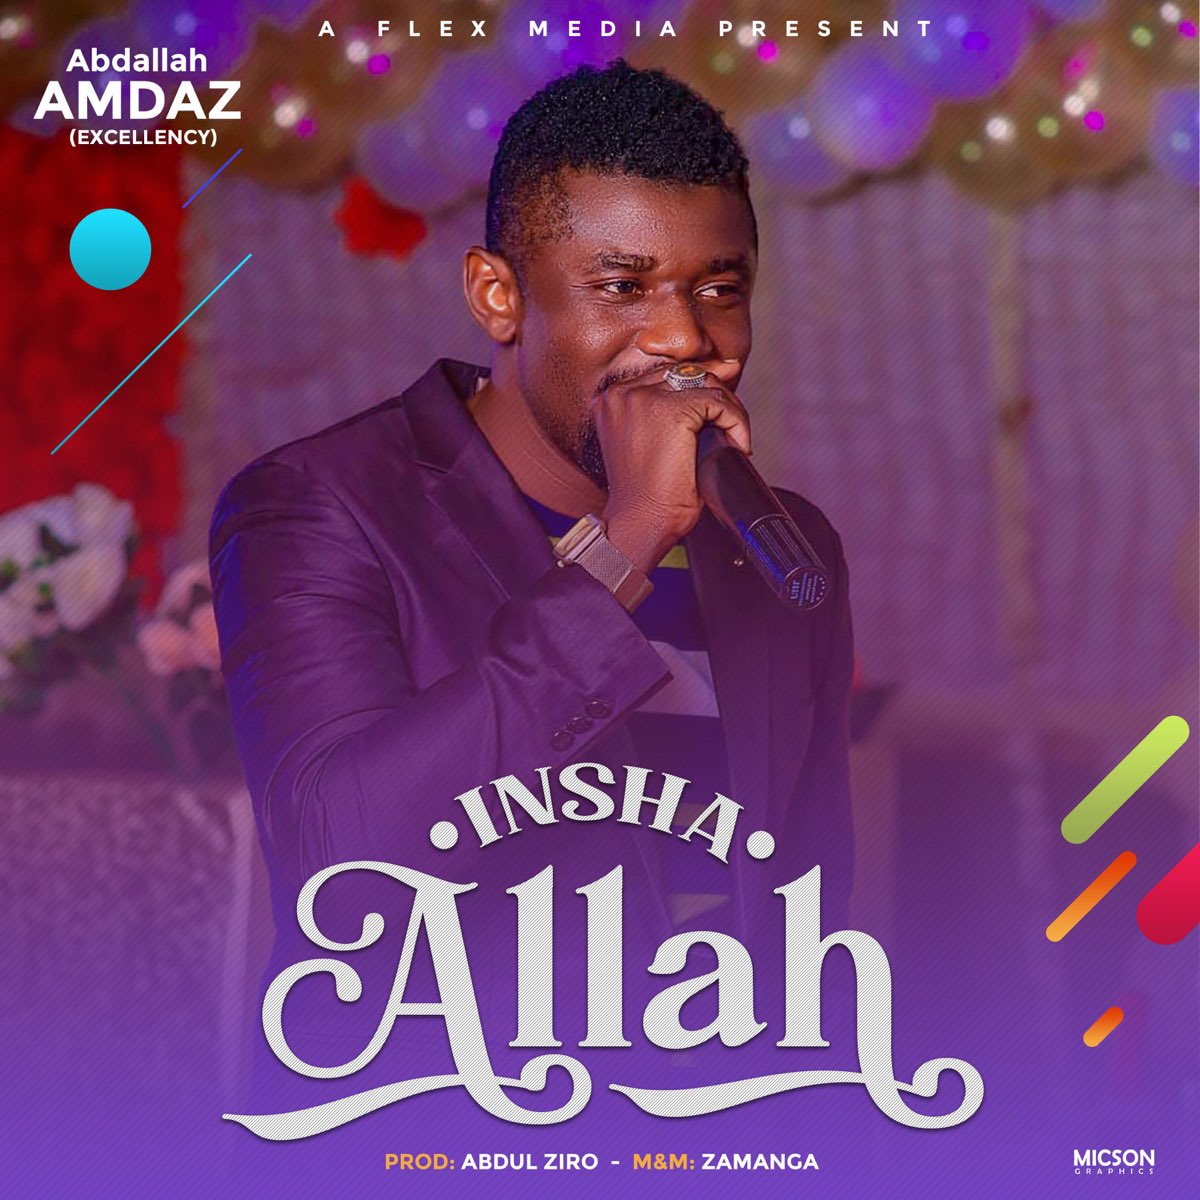 Insha Allah by Abdallah Amdaz on Apple Music